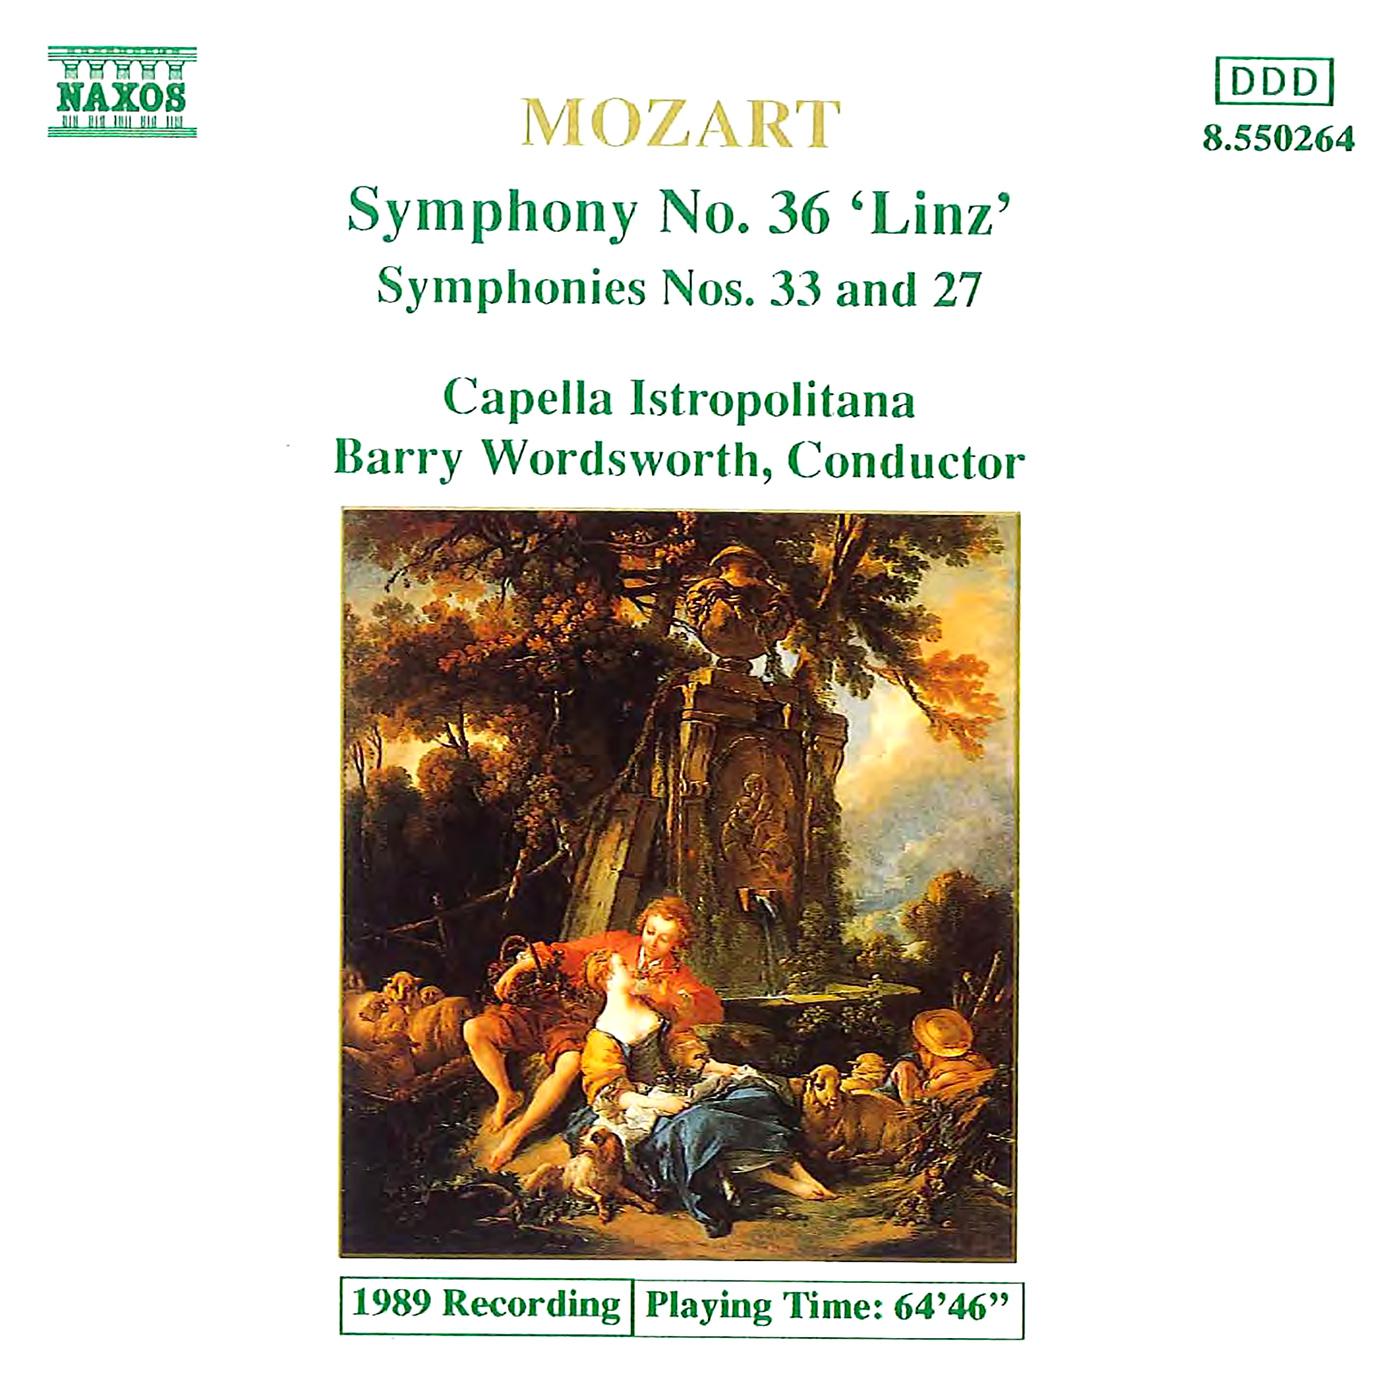 MOZART: Symphonies Nos. 36, 33 and 27